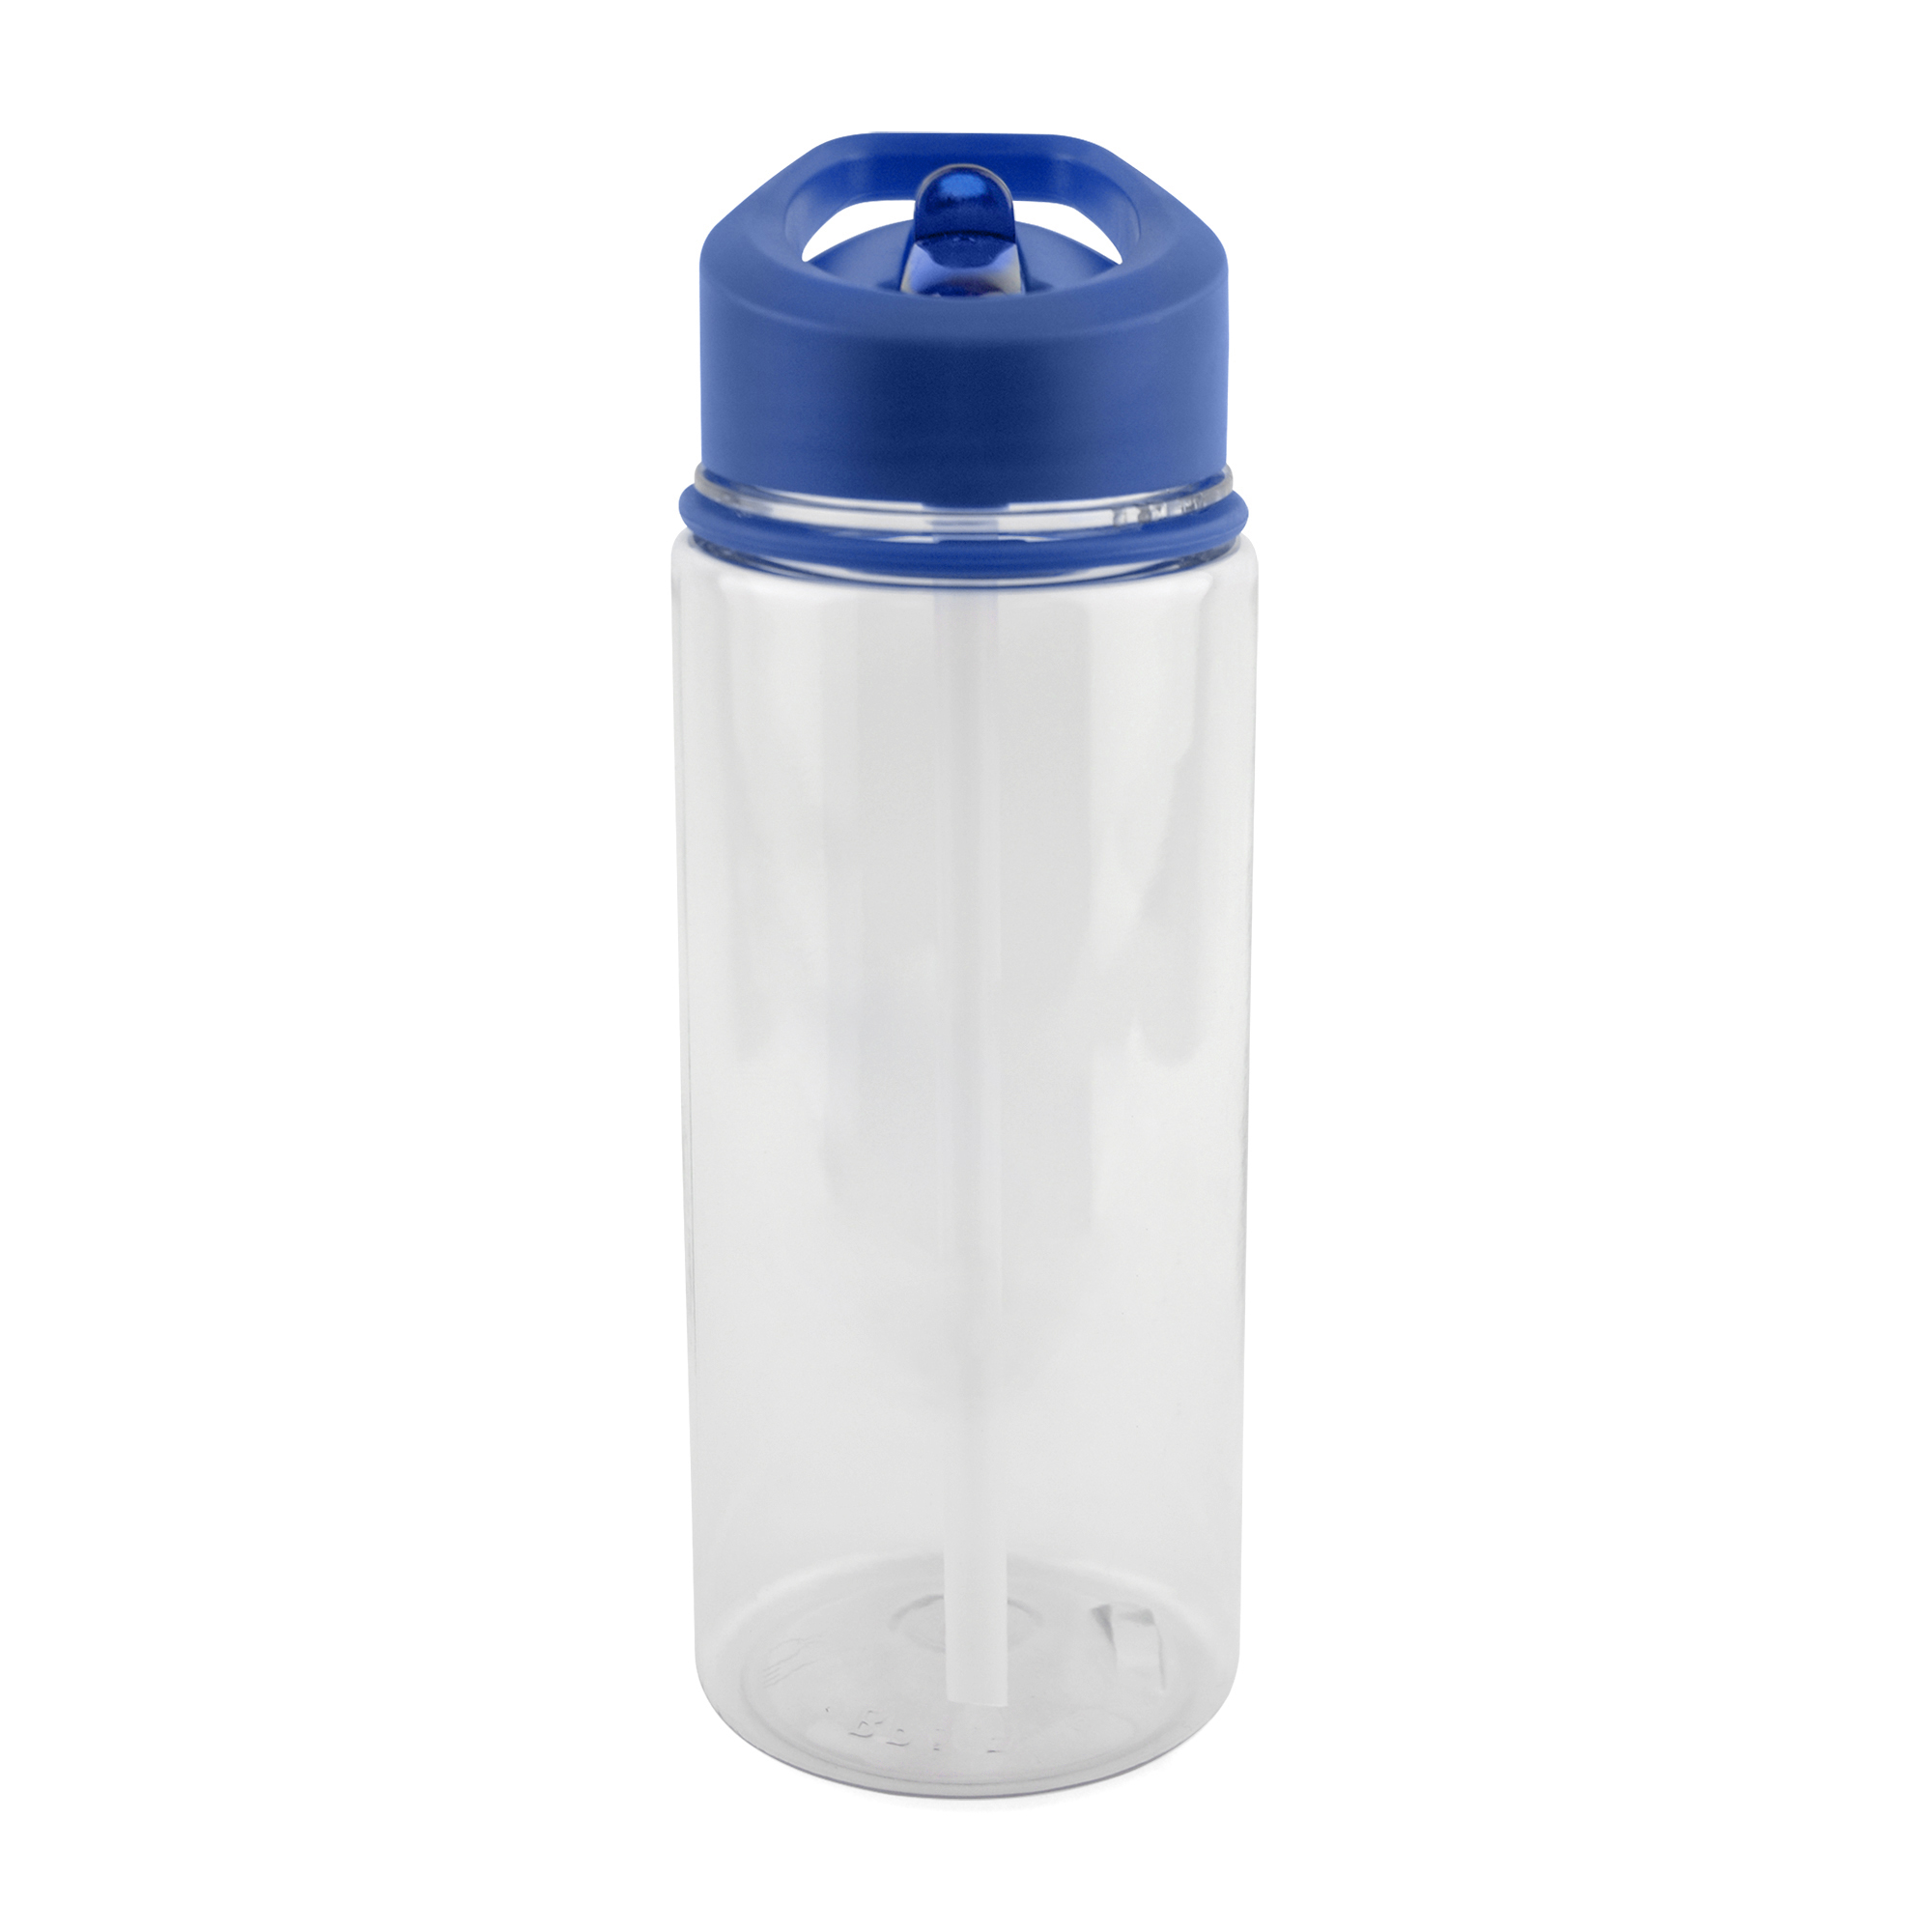 MG9705BL - Tarn 750ml Promotional PET Plastic Sports Bottle